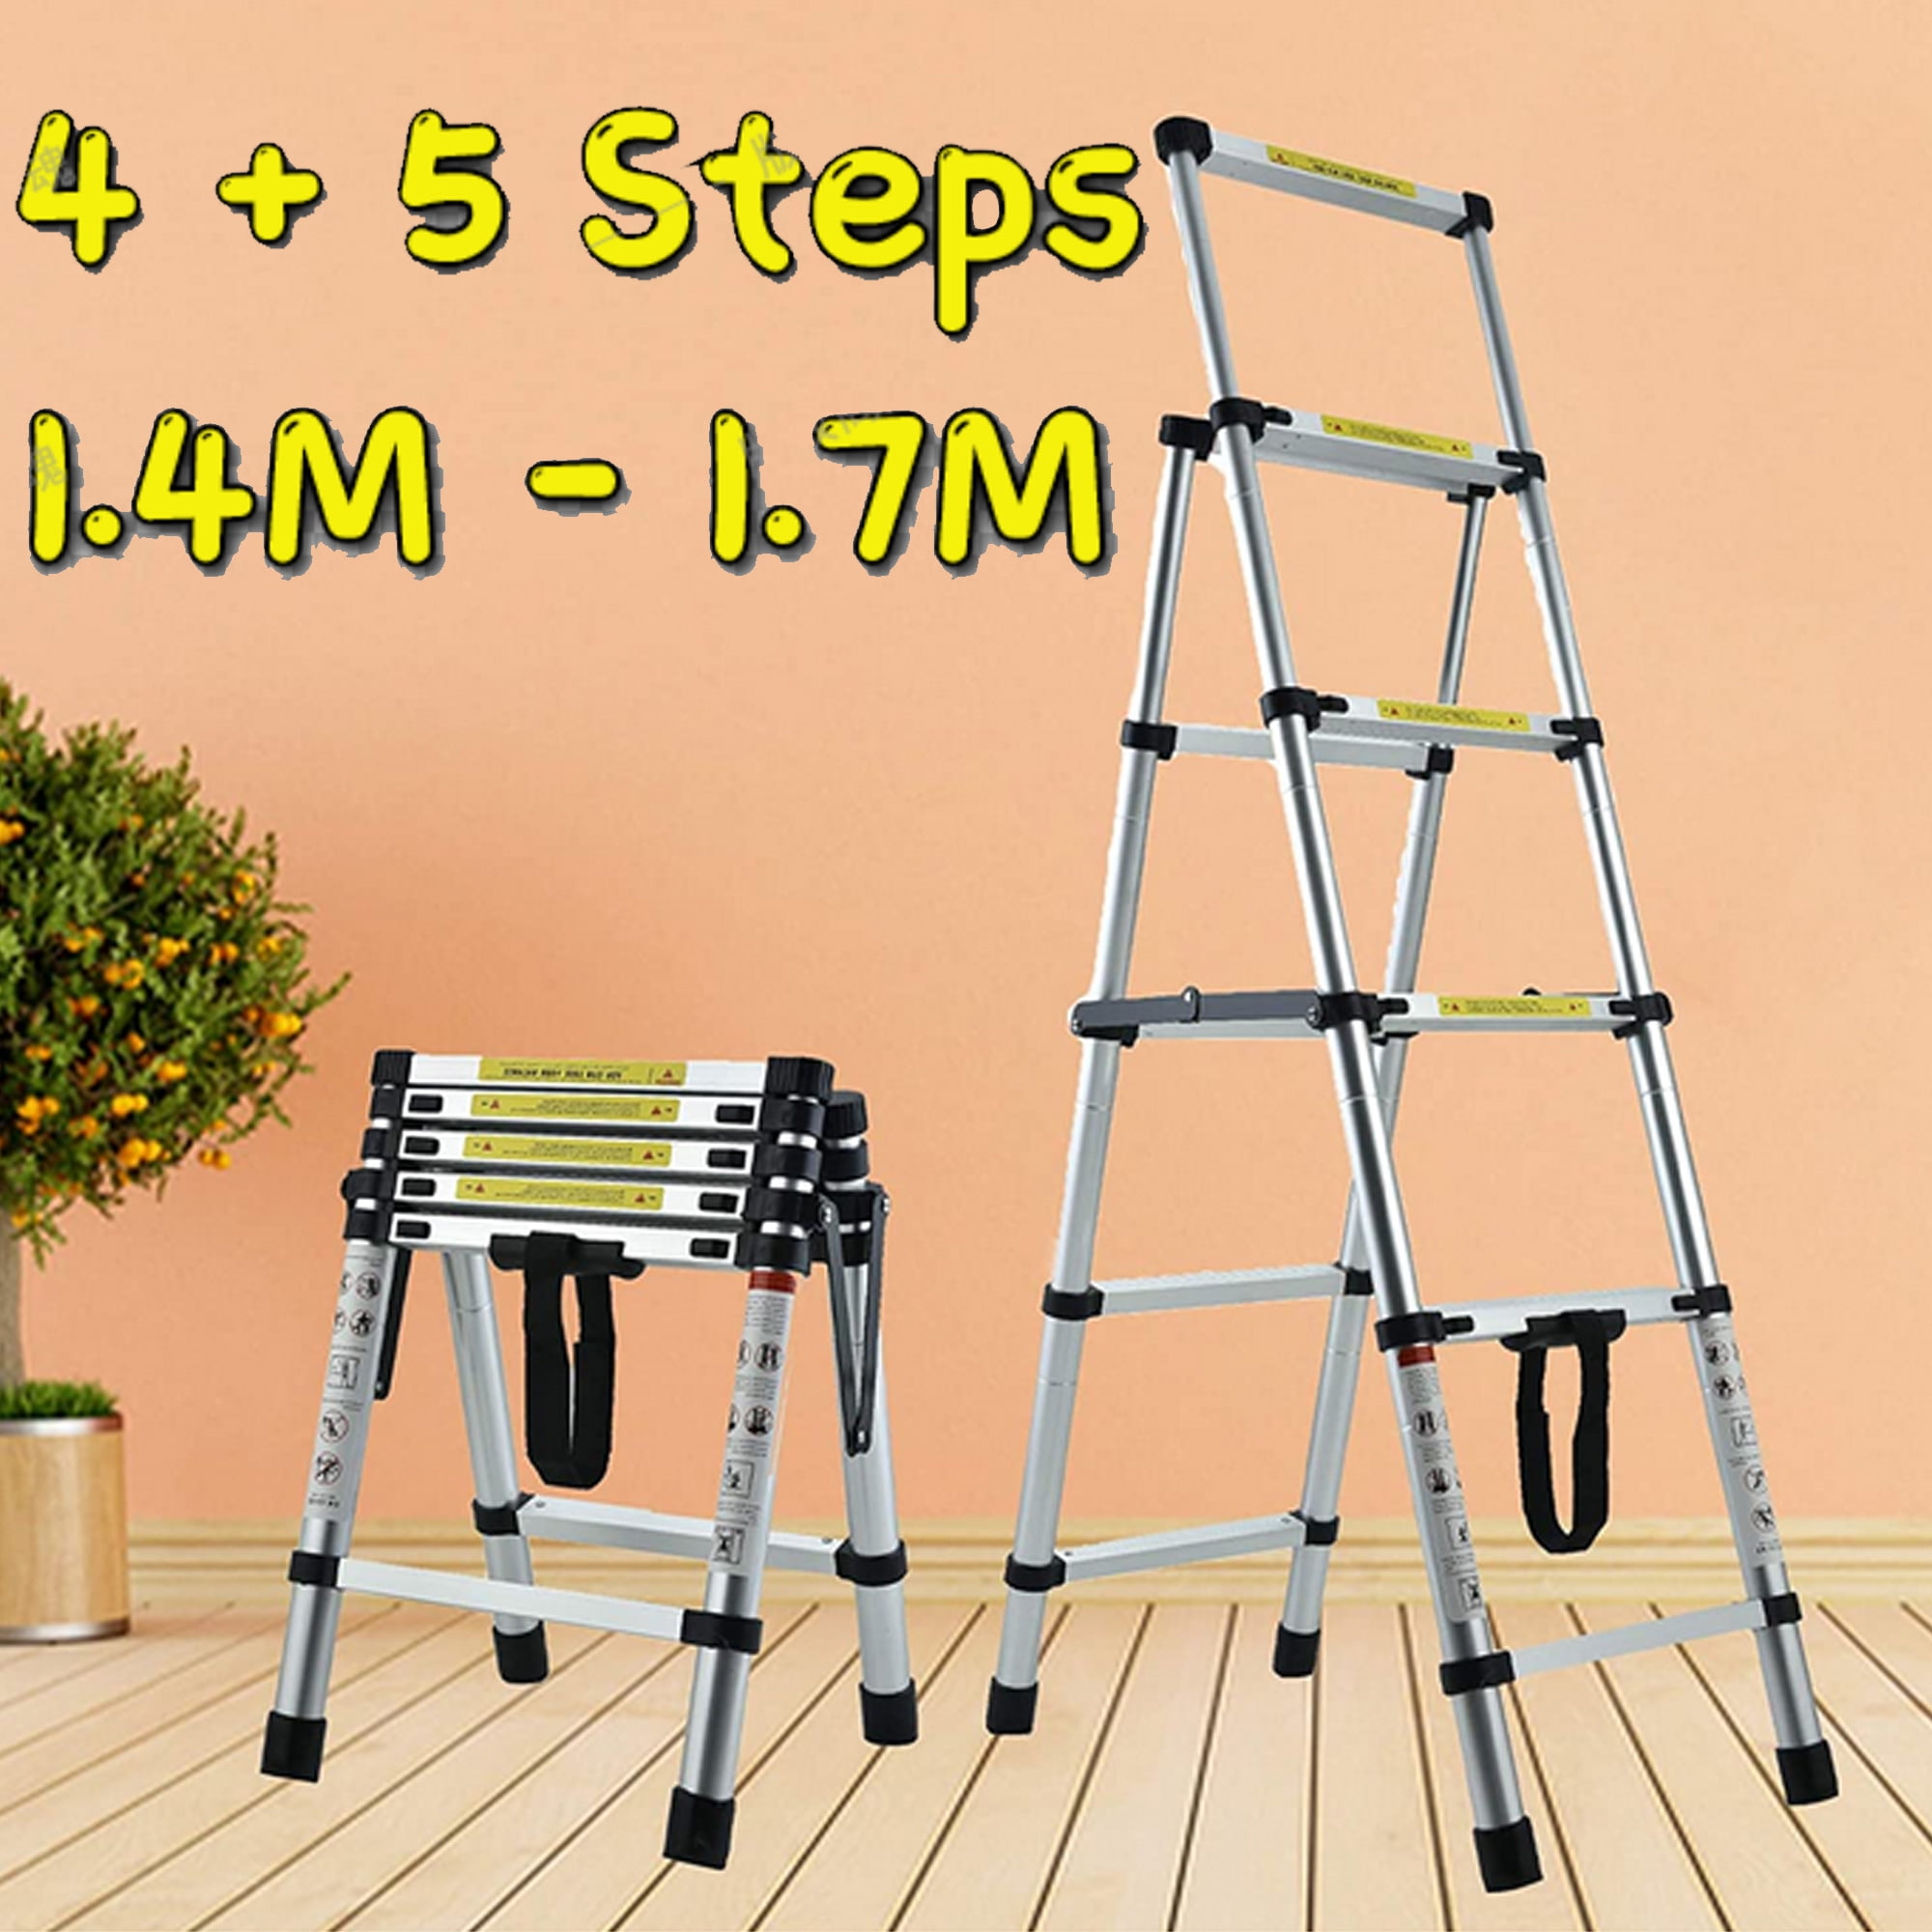 Bowoshen Aluminium Step Ladder 2 Ways Combination with Handrail, 1.4M 1.7M Telescopic Folding Extension Ladder for Household DIY Building Work ( 4 + 5 Steps) - Walmart.com